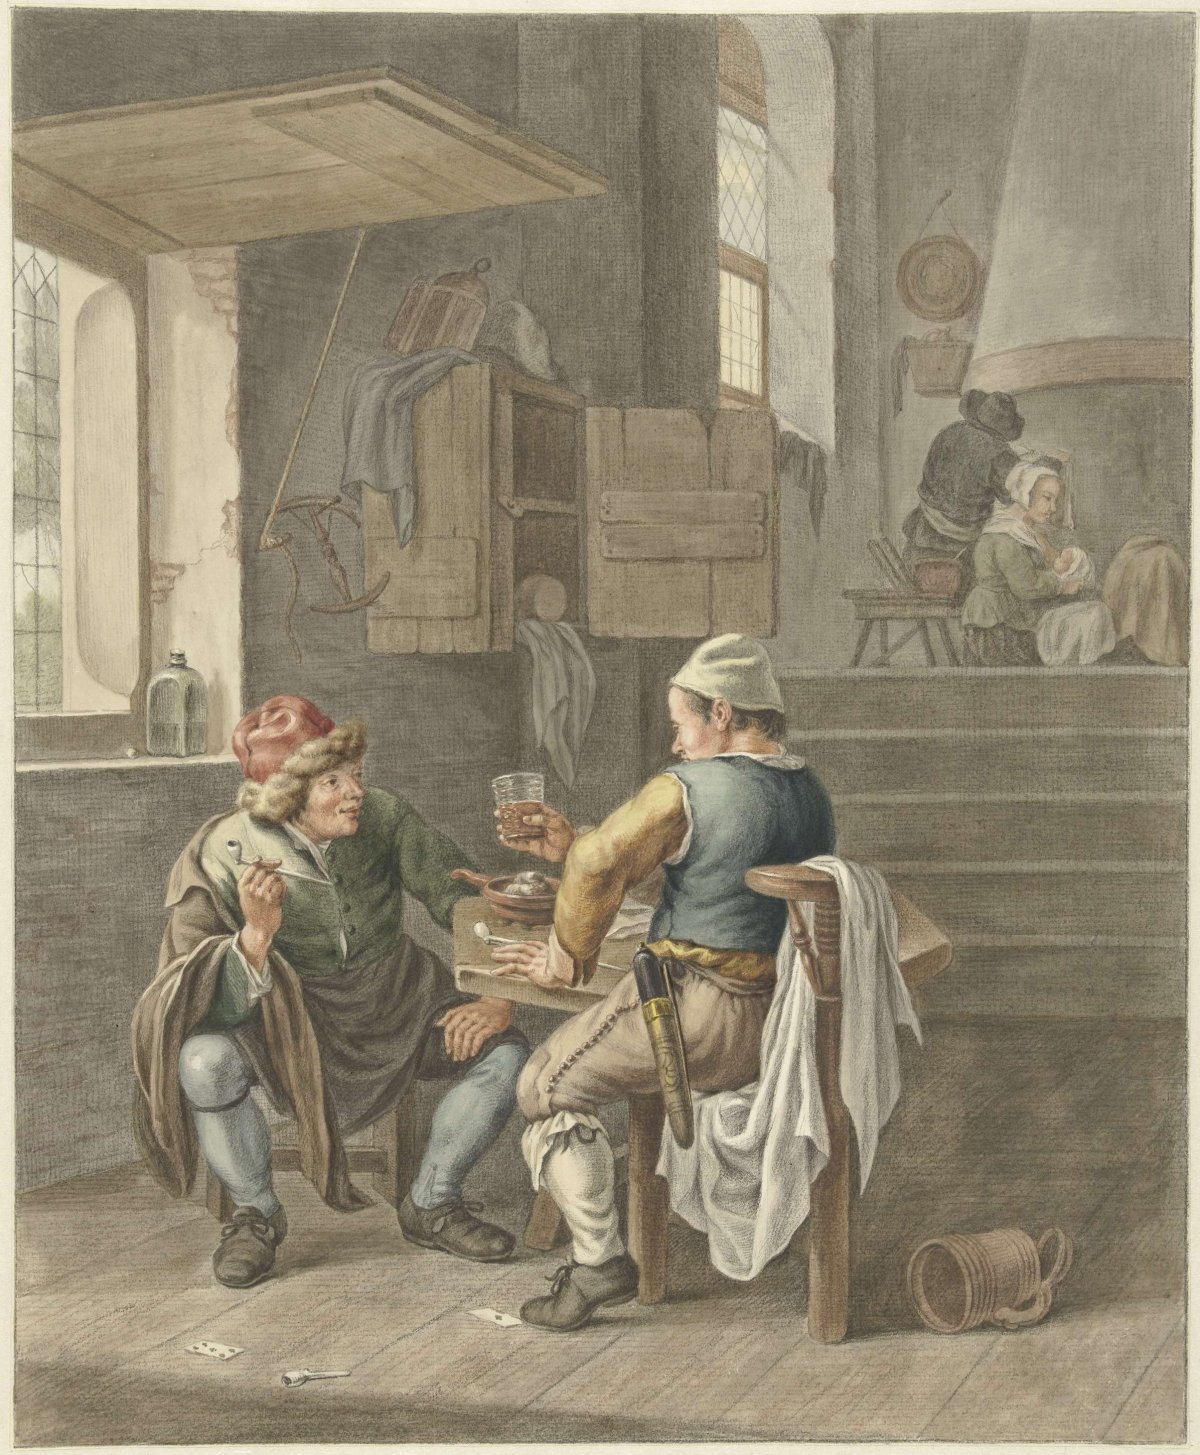 The Tavern, Abraham Delfos, 1741 - 1820